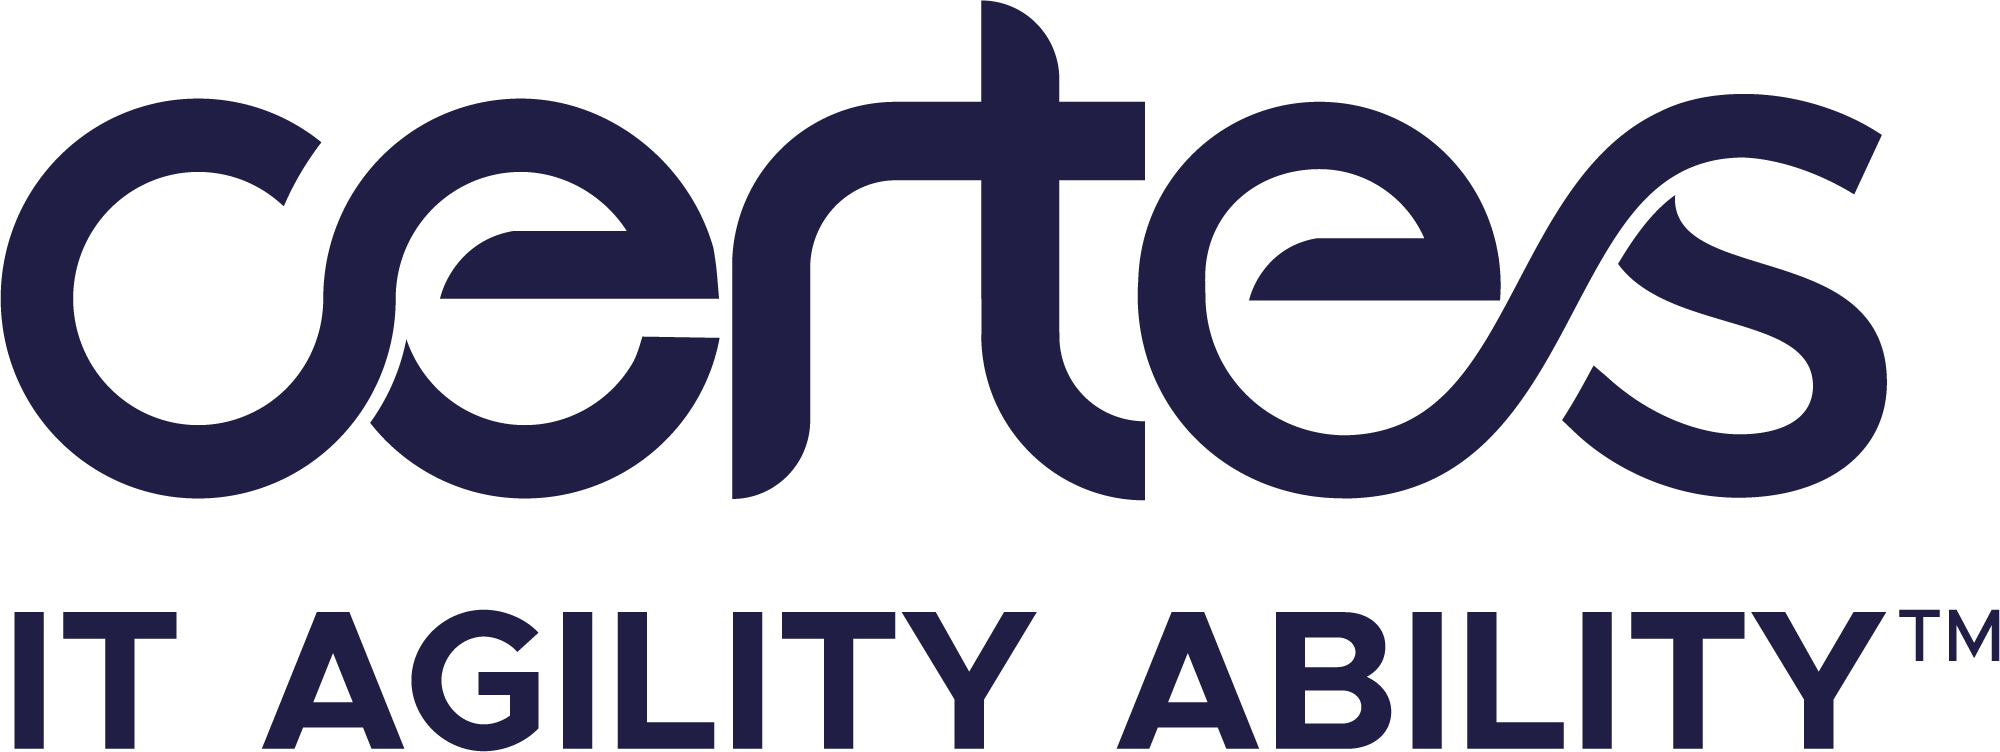 CERTES-IT-Agility-Ability-Logo-Col-1